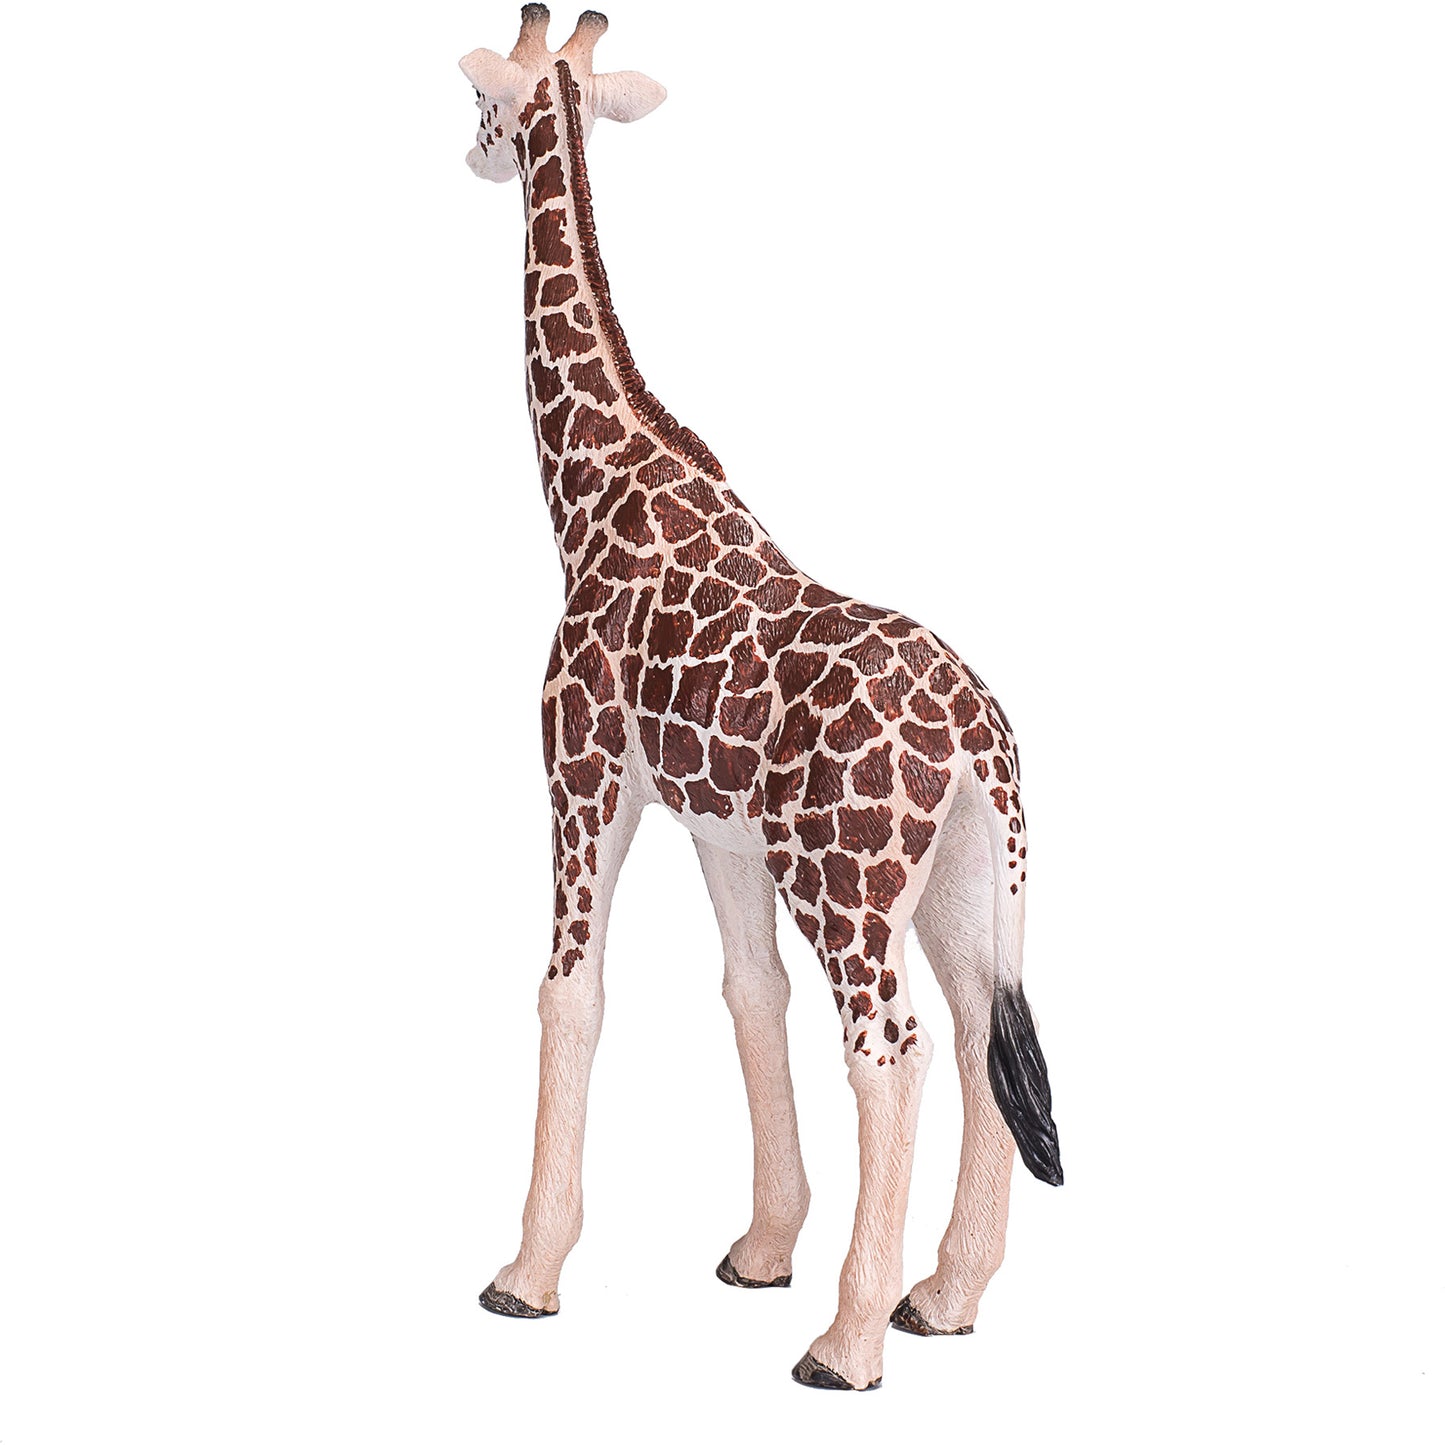 Giraffe Male